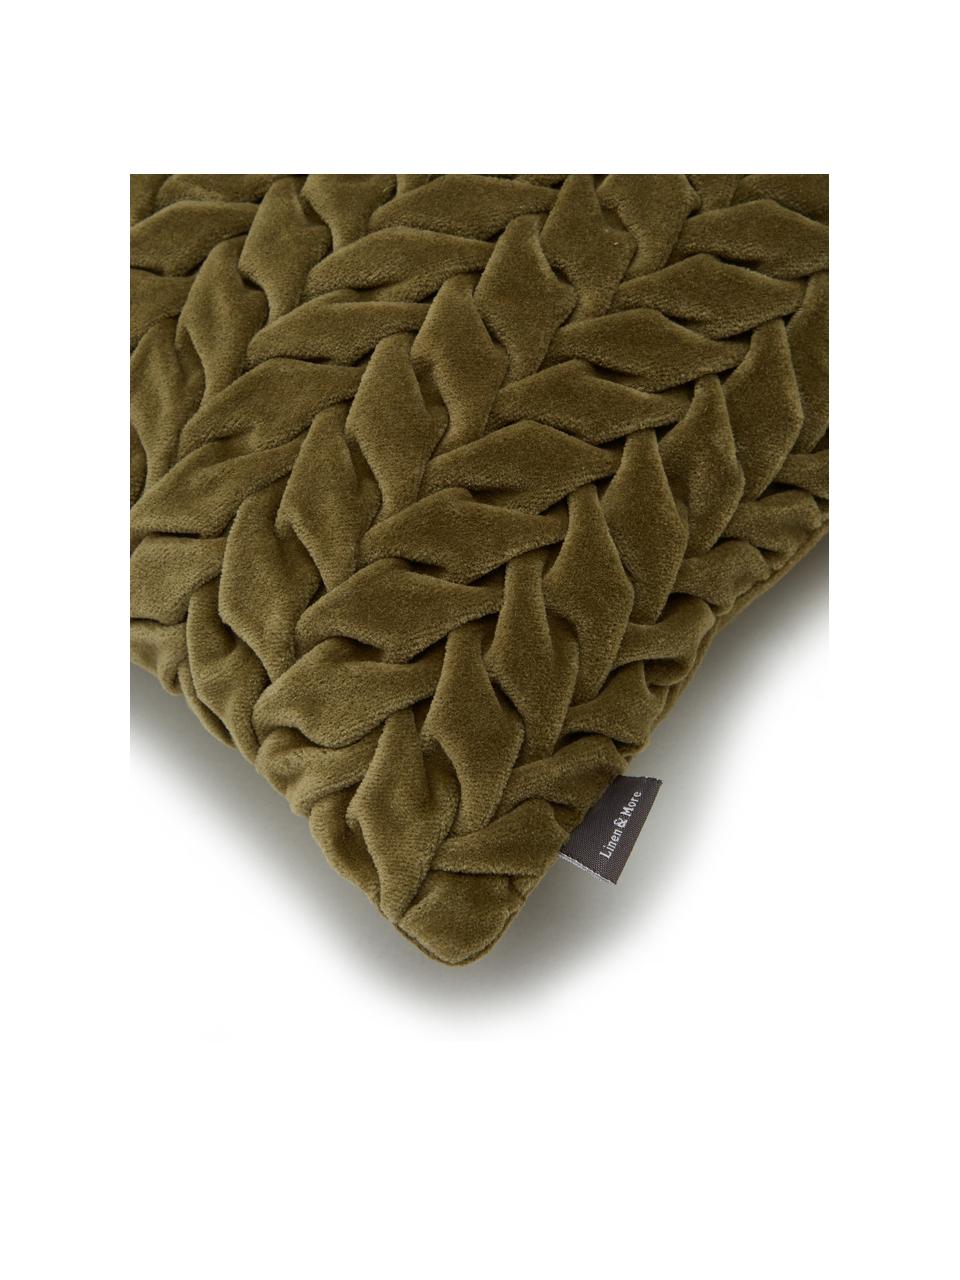 Cojín de terciopelo texturizado Smock, con relleno, Funda: 100% terciopelo de algodó, Verde caqui, An 30 x L 50 cm